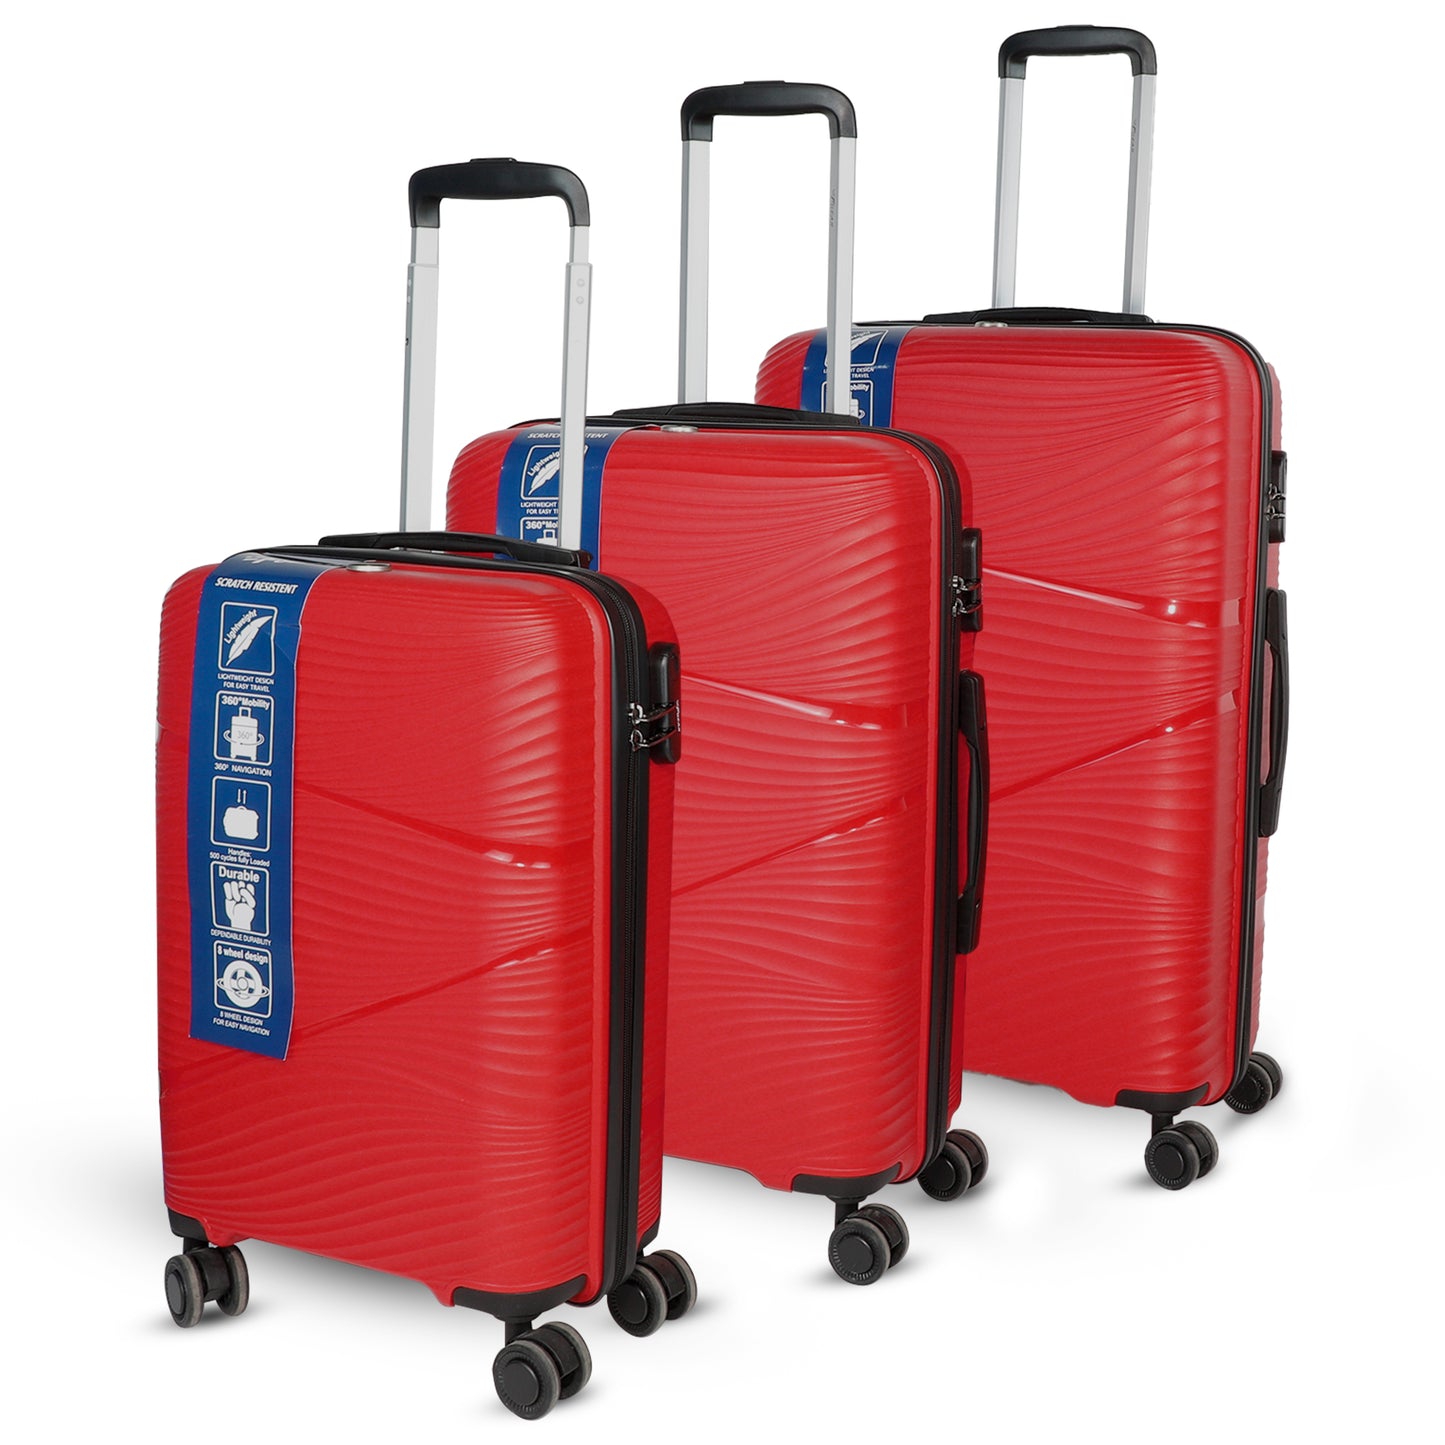 Joy PP008 Red Suitcase Set of 3